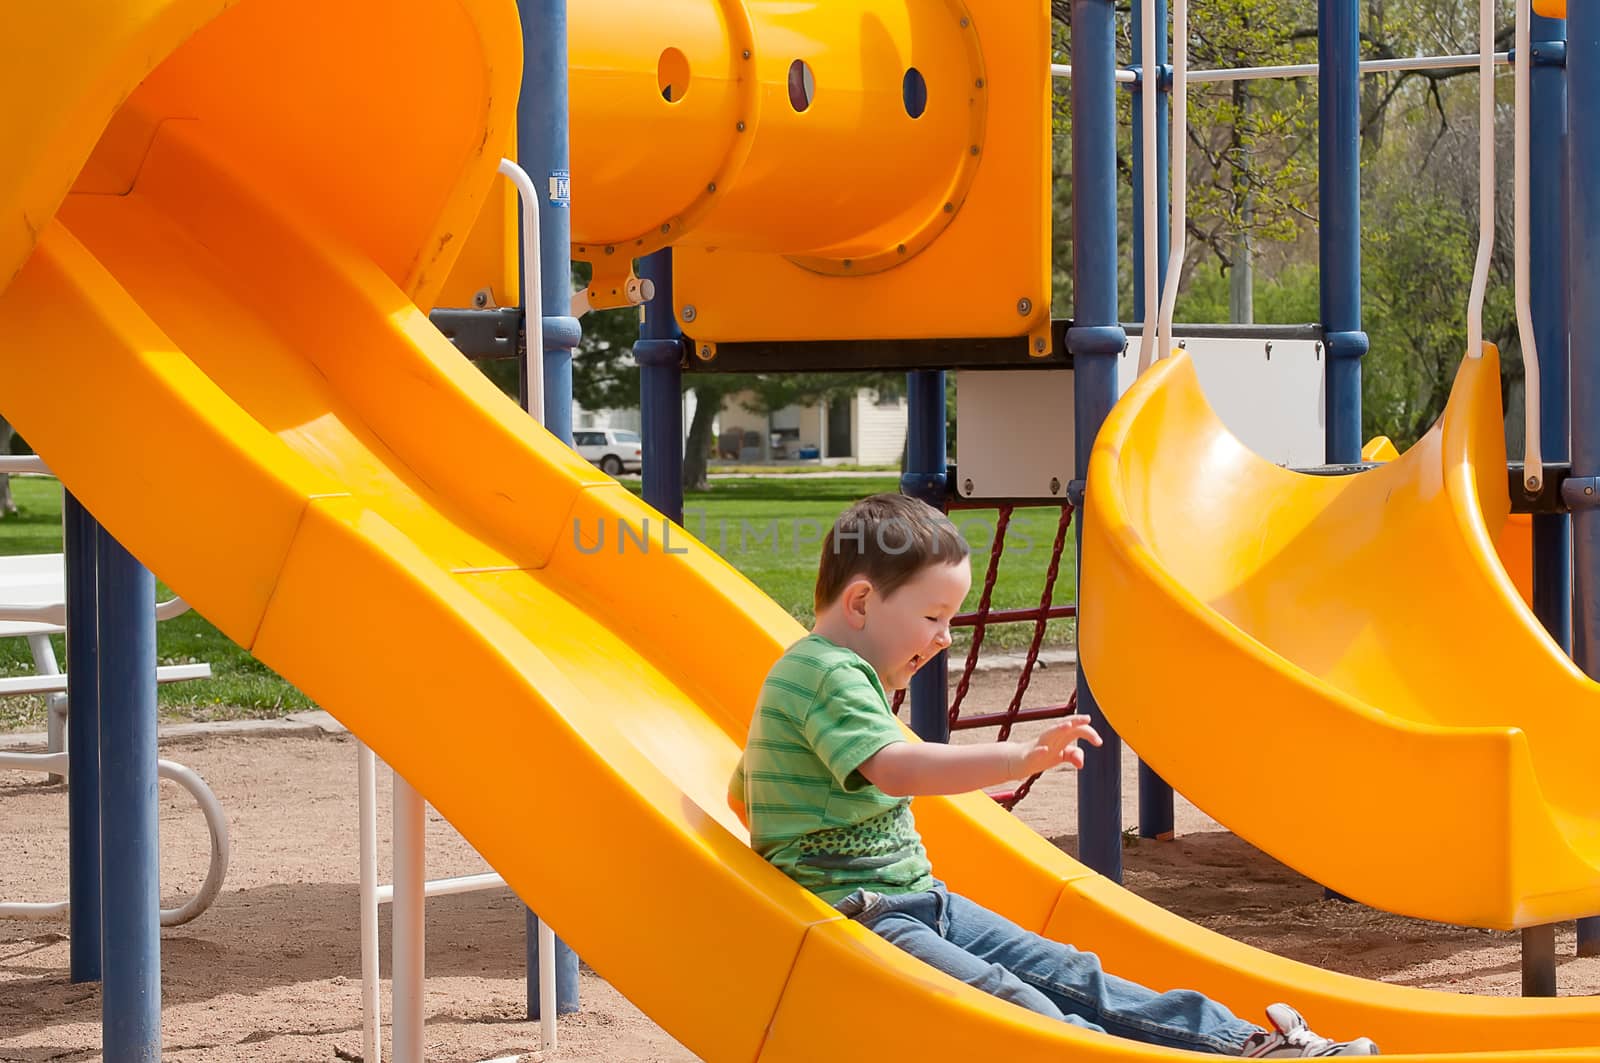 Little boy enjoying the playground equipment at the city park.